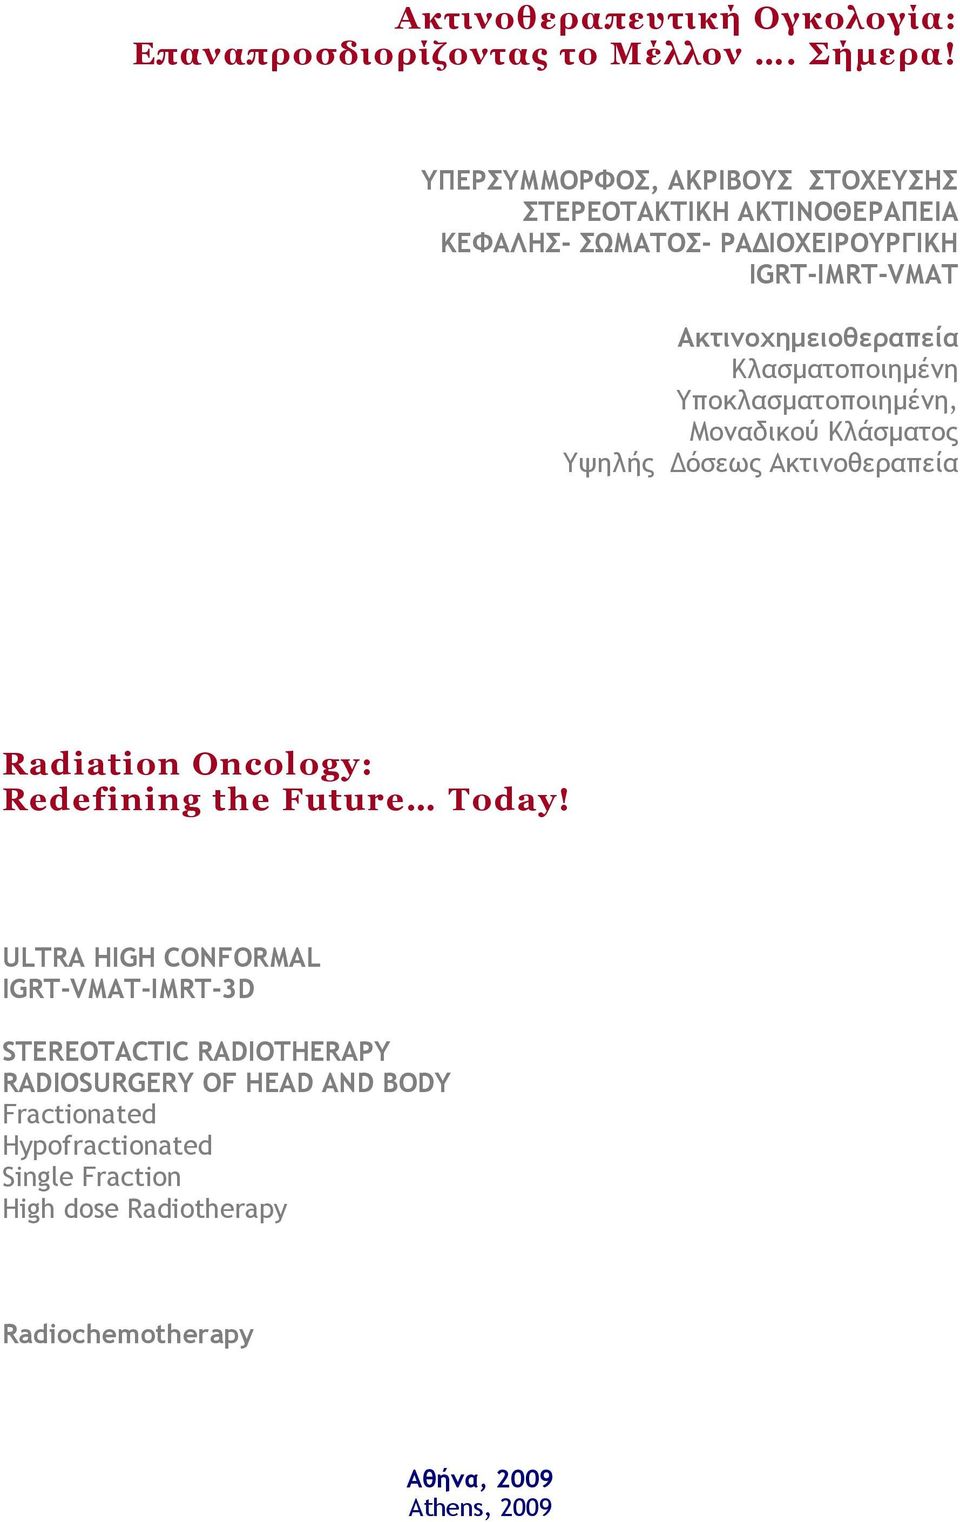 Kλασµατοποιηµένη Υποκλασµατοποιηµένη, Μοναδικού Κλάσµατος Υψηλής όσεως Ακτινοθεραπεία Radiation Oncology: Redefining the Future Today!